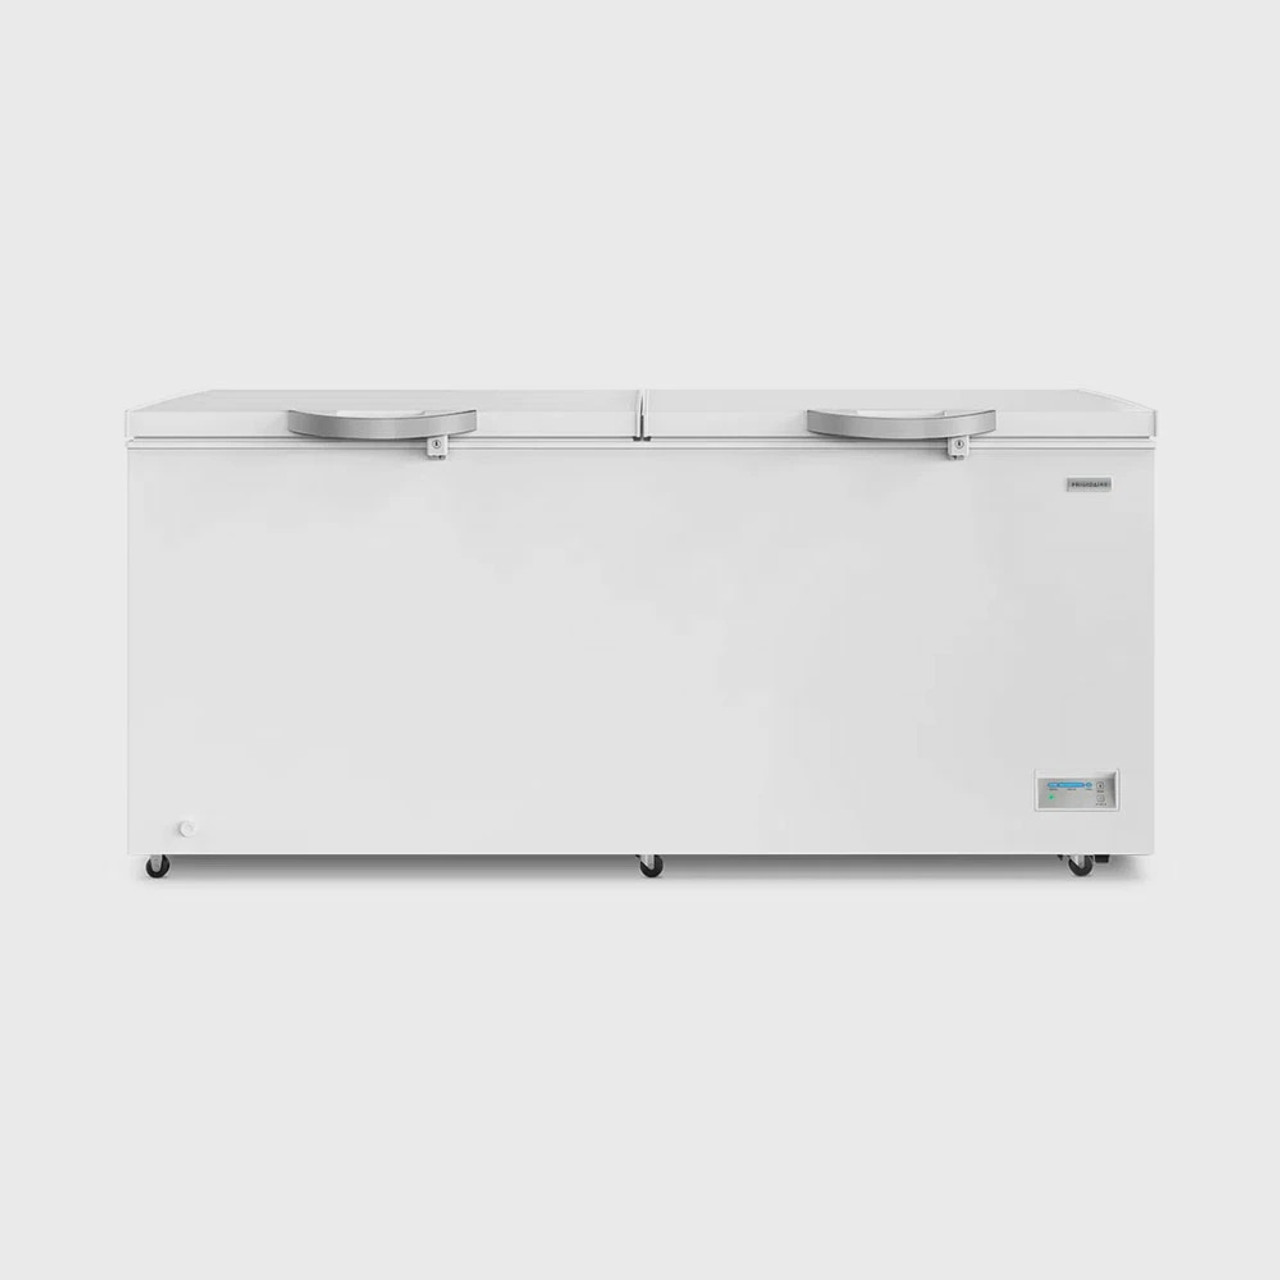 Frigidaire ( FFC25W3HTW ), Congelador, Chest Freezer, De 24.8 Cu. Ft., Blanco